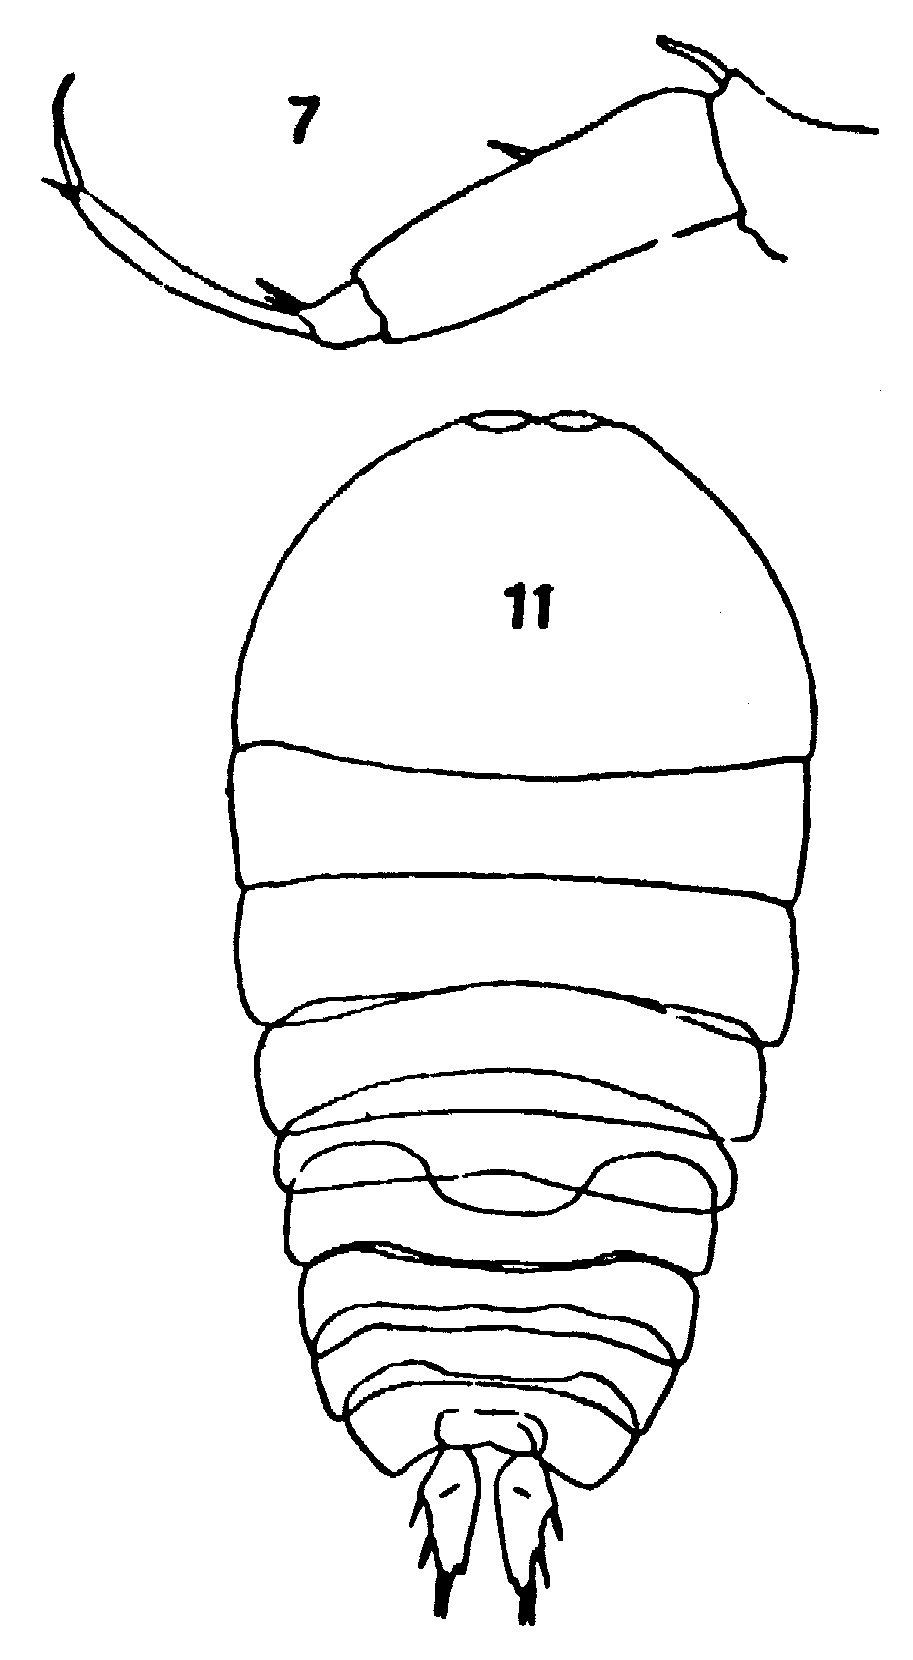 Espce Sapphirina stellata - Planche 4 de figures morphologiques